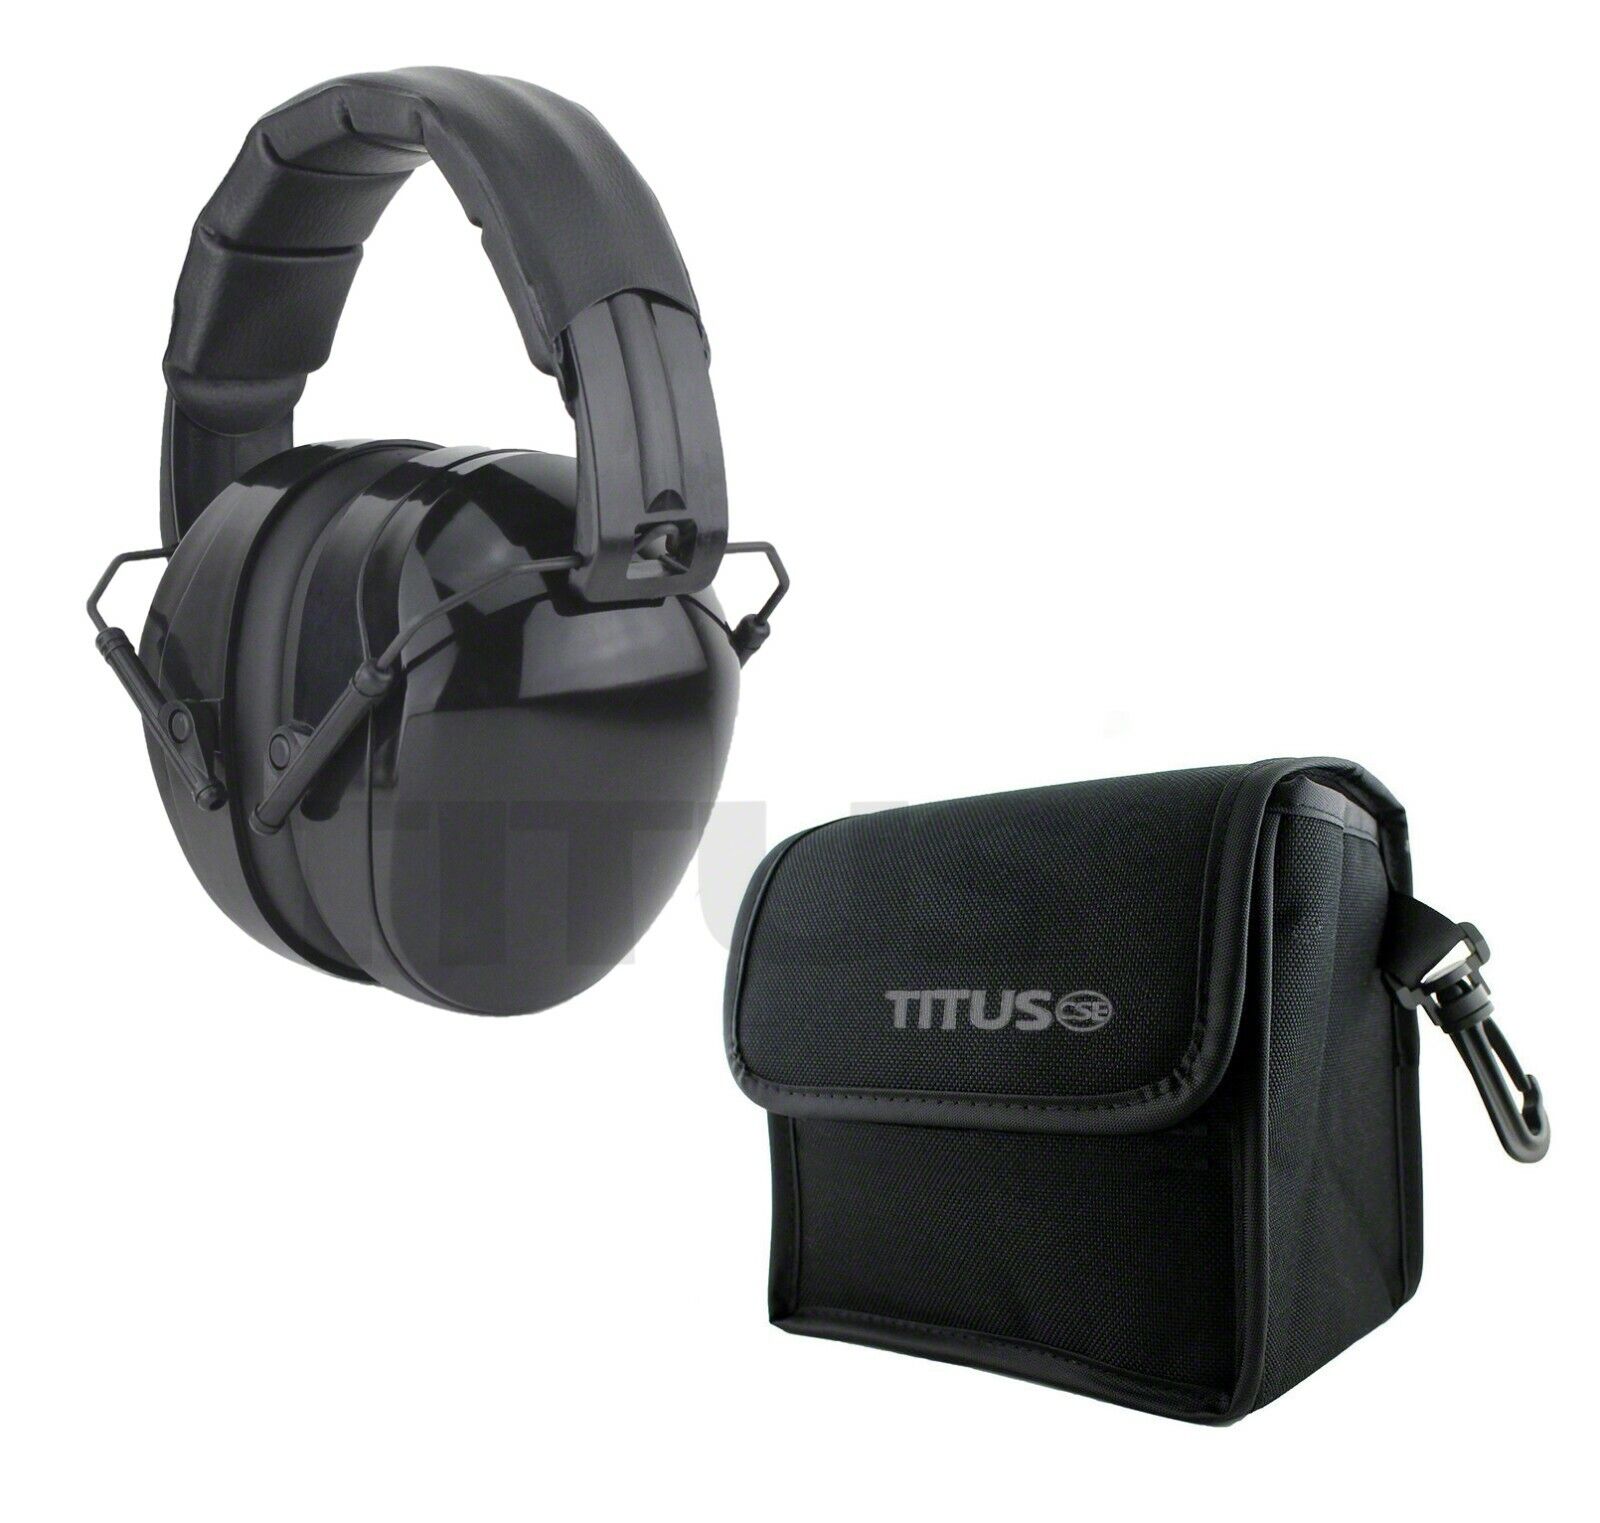 Titus Shooting Gun Range Tactical Noise Reduction High NRR Hearing Protection 